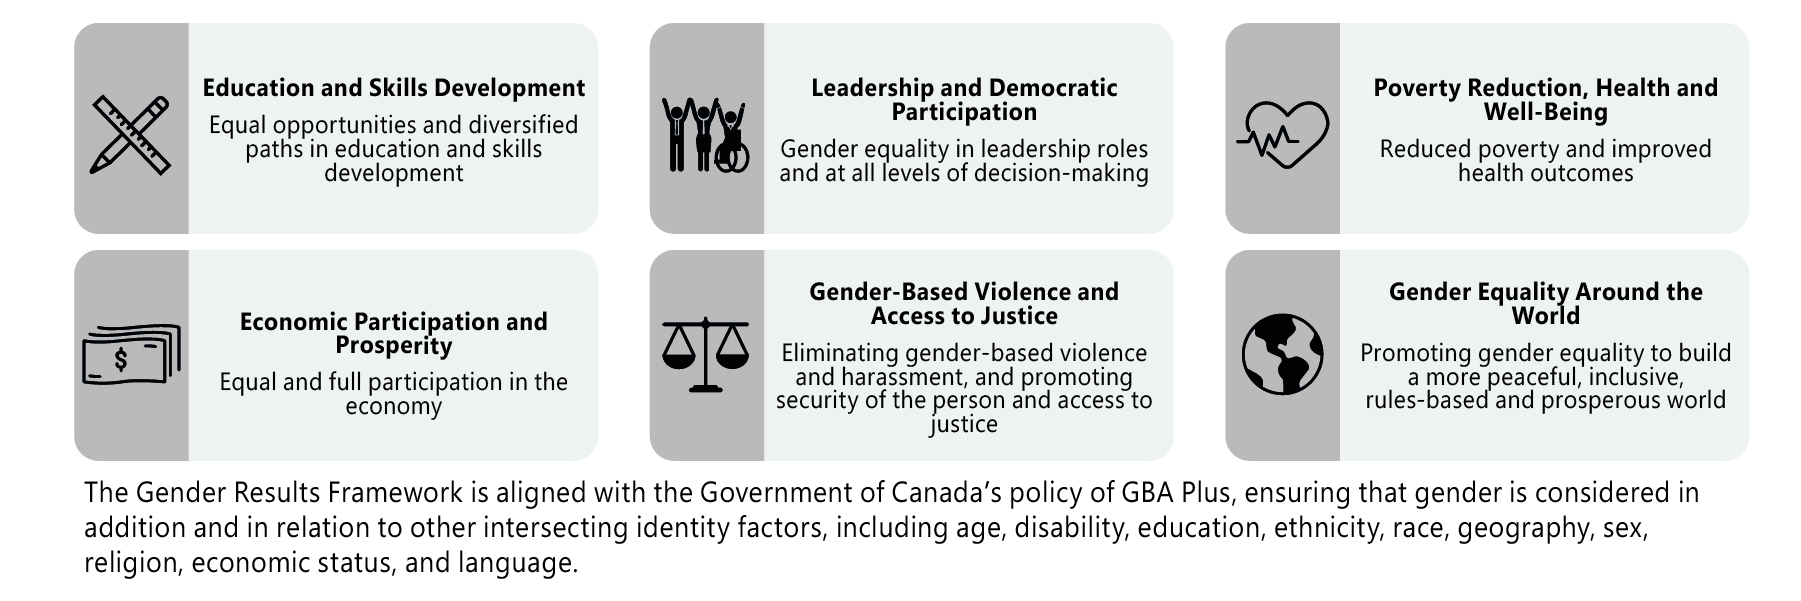 Figure 1: Gender Equality Goals for Canada